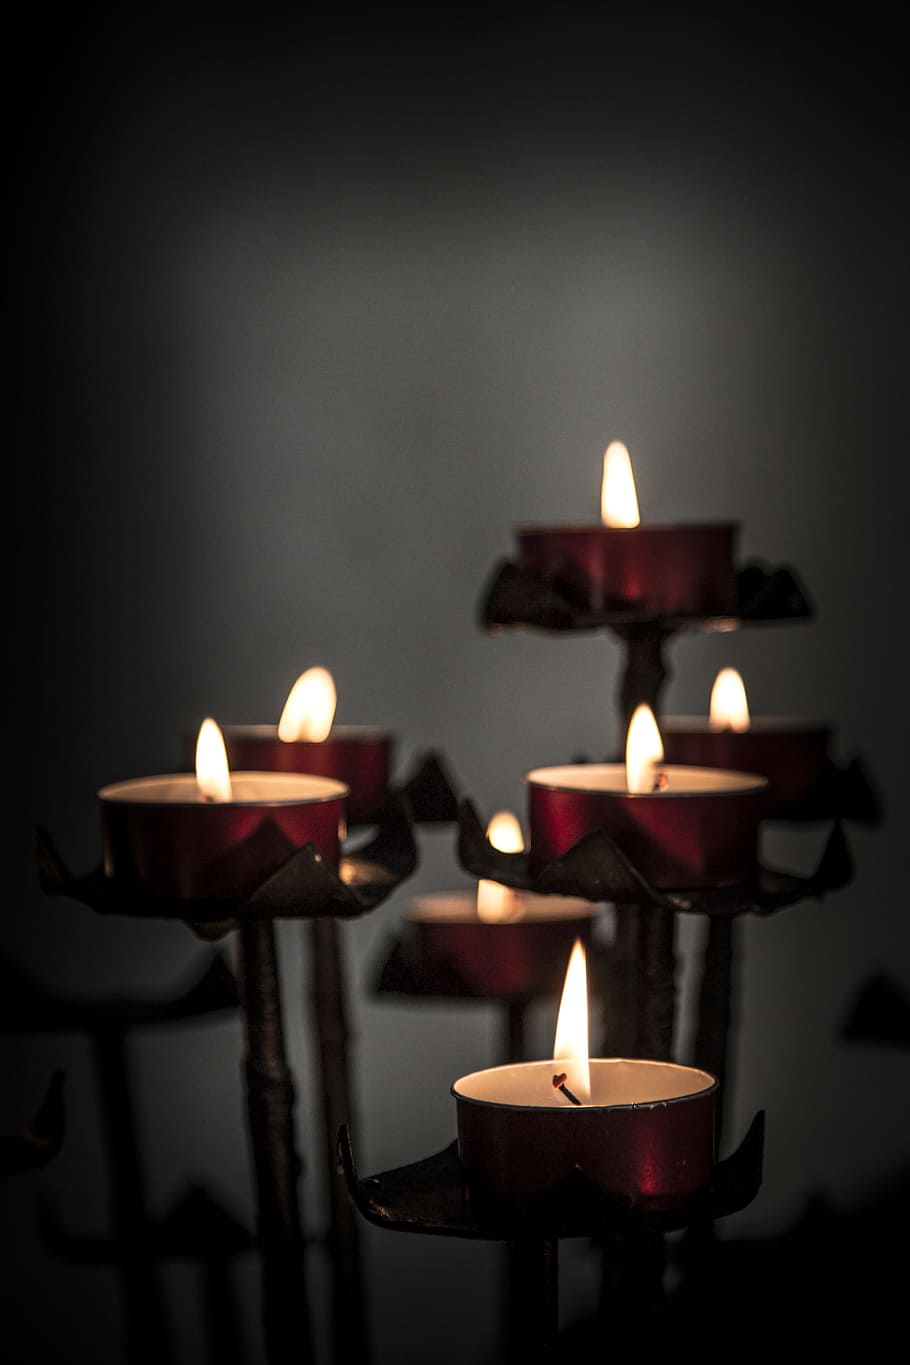 candelitas encendidas, iglesia, velas, votivo, religión, religioso, luz, símbolo, llama, luz de las velas